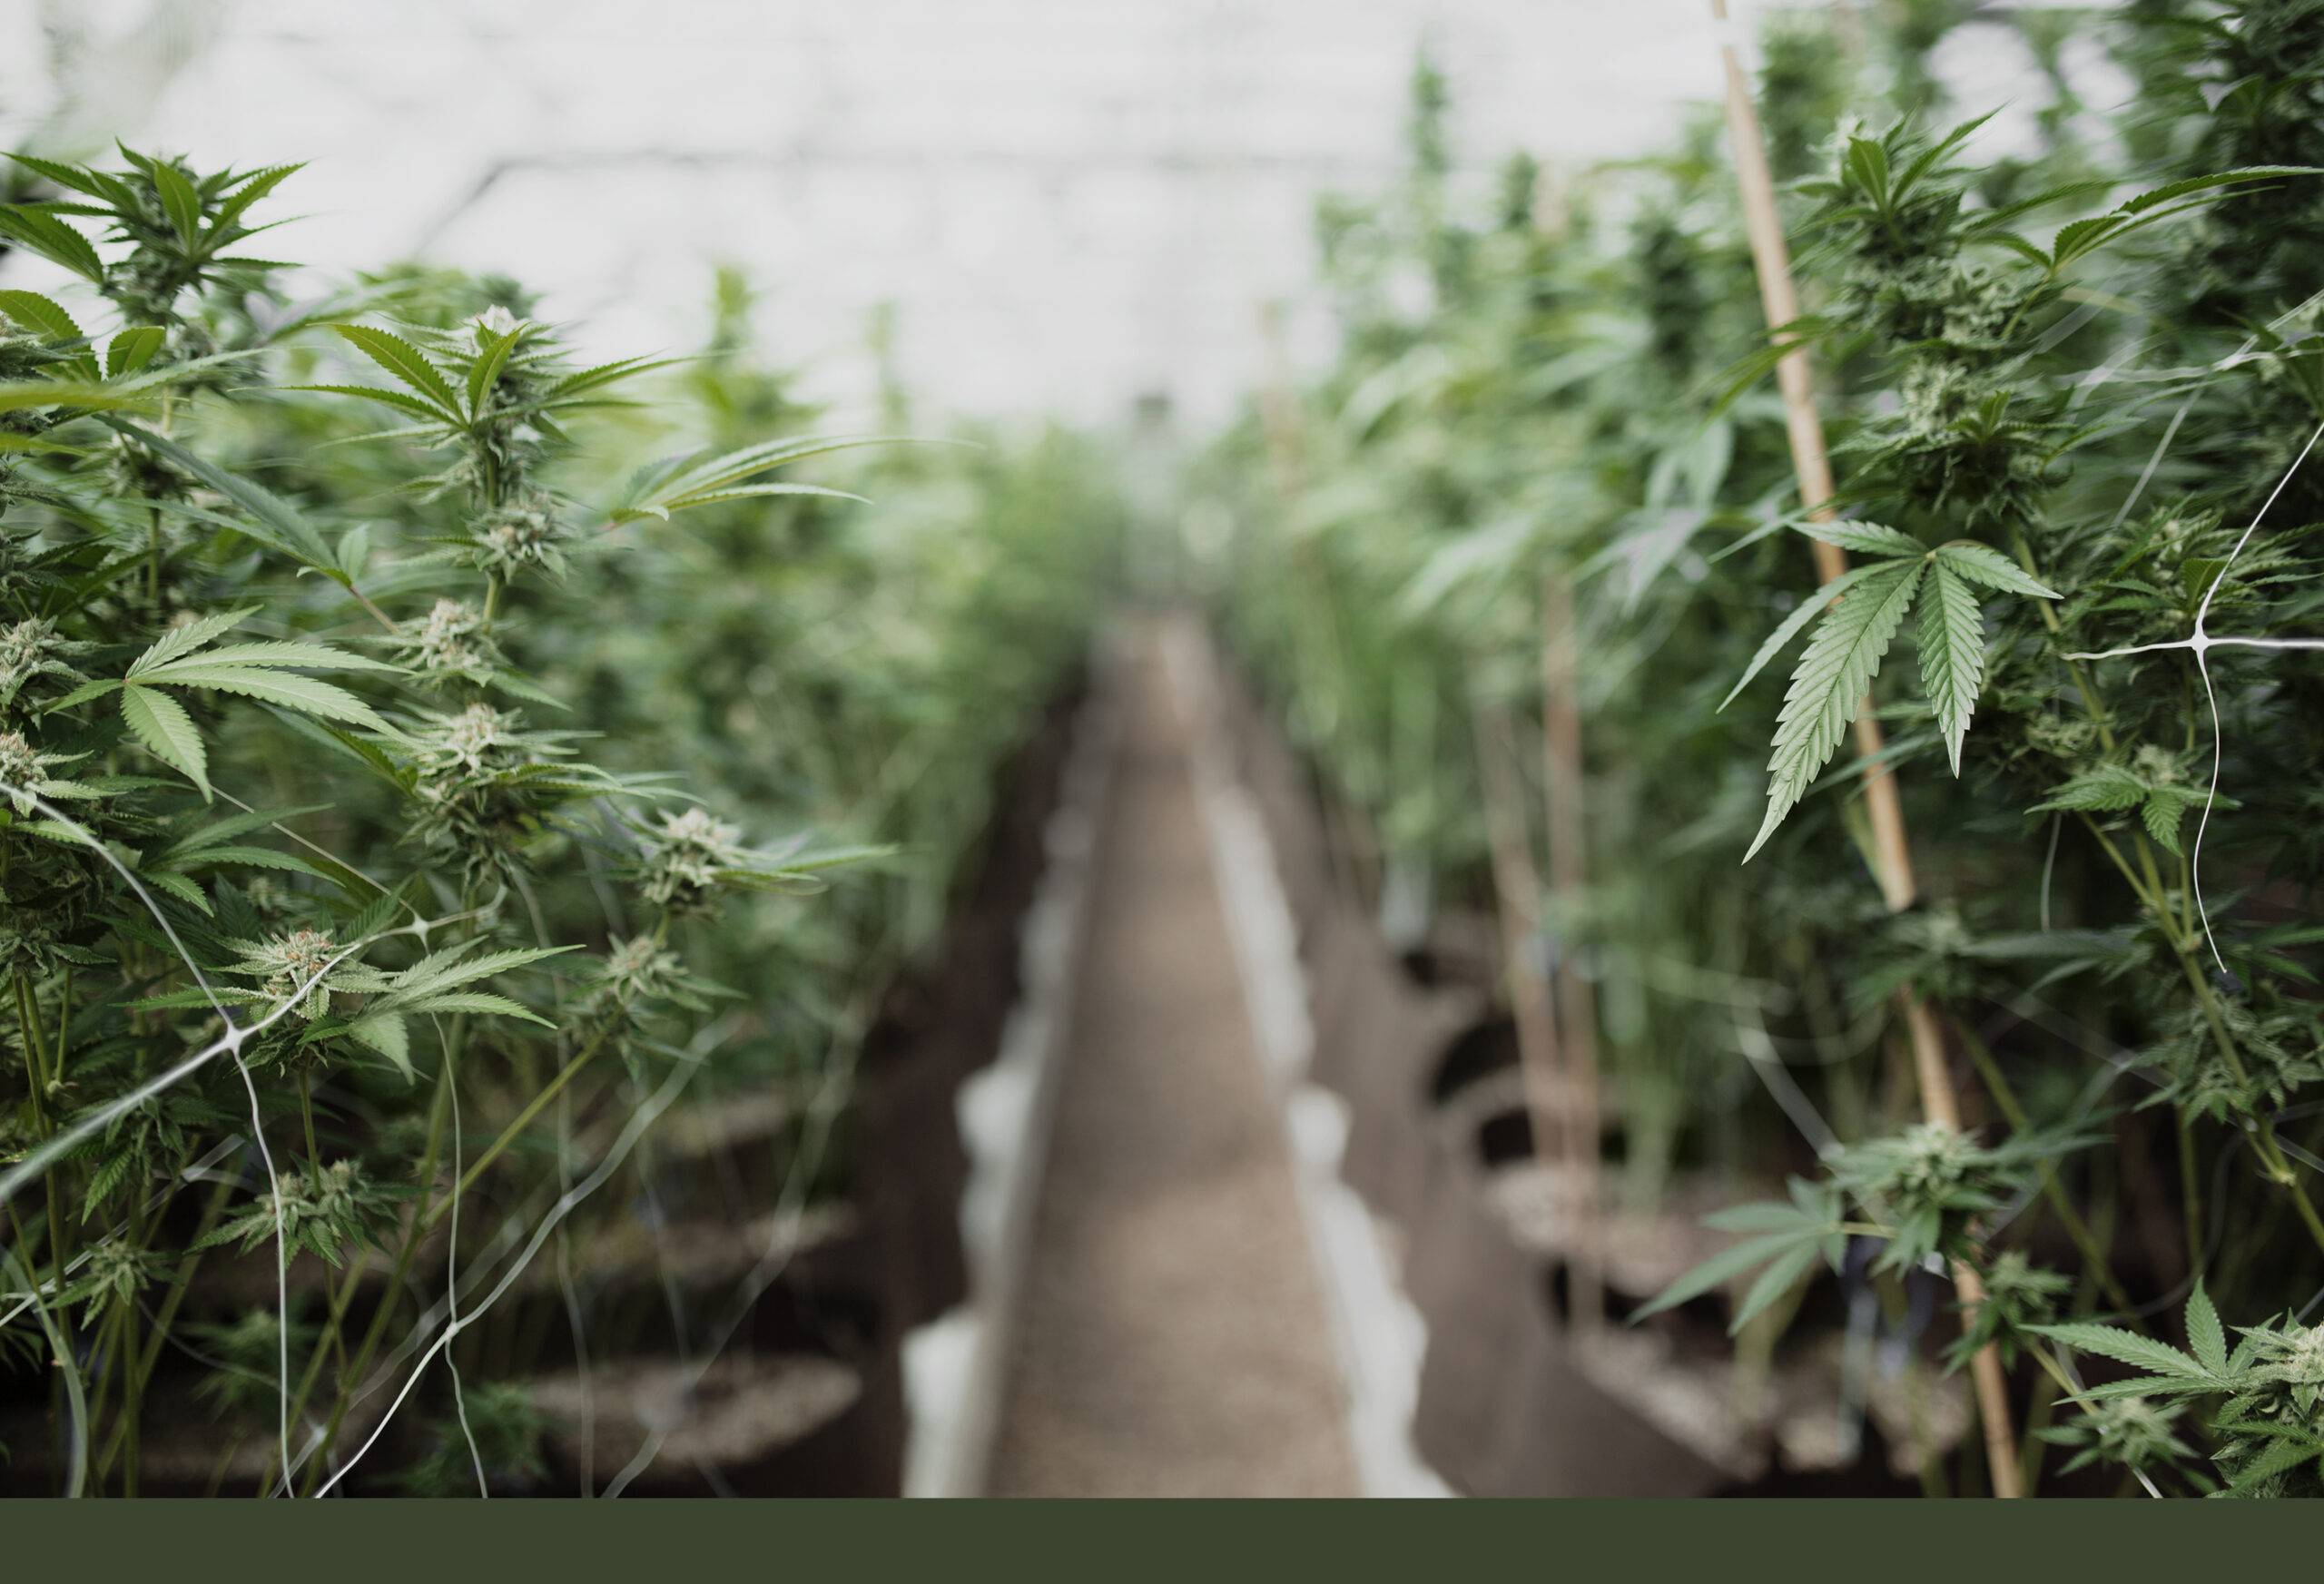 Indoor hemp flower is the new lowkey cannabis